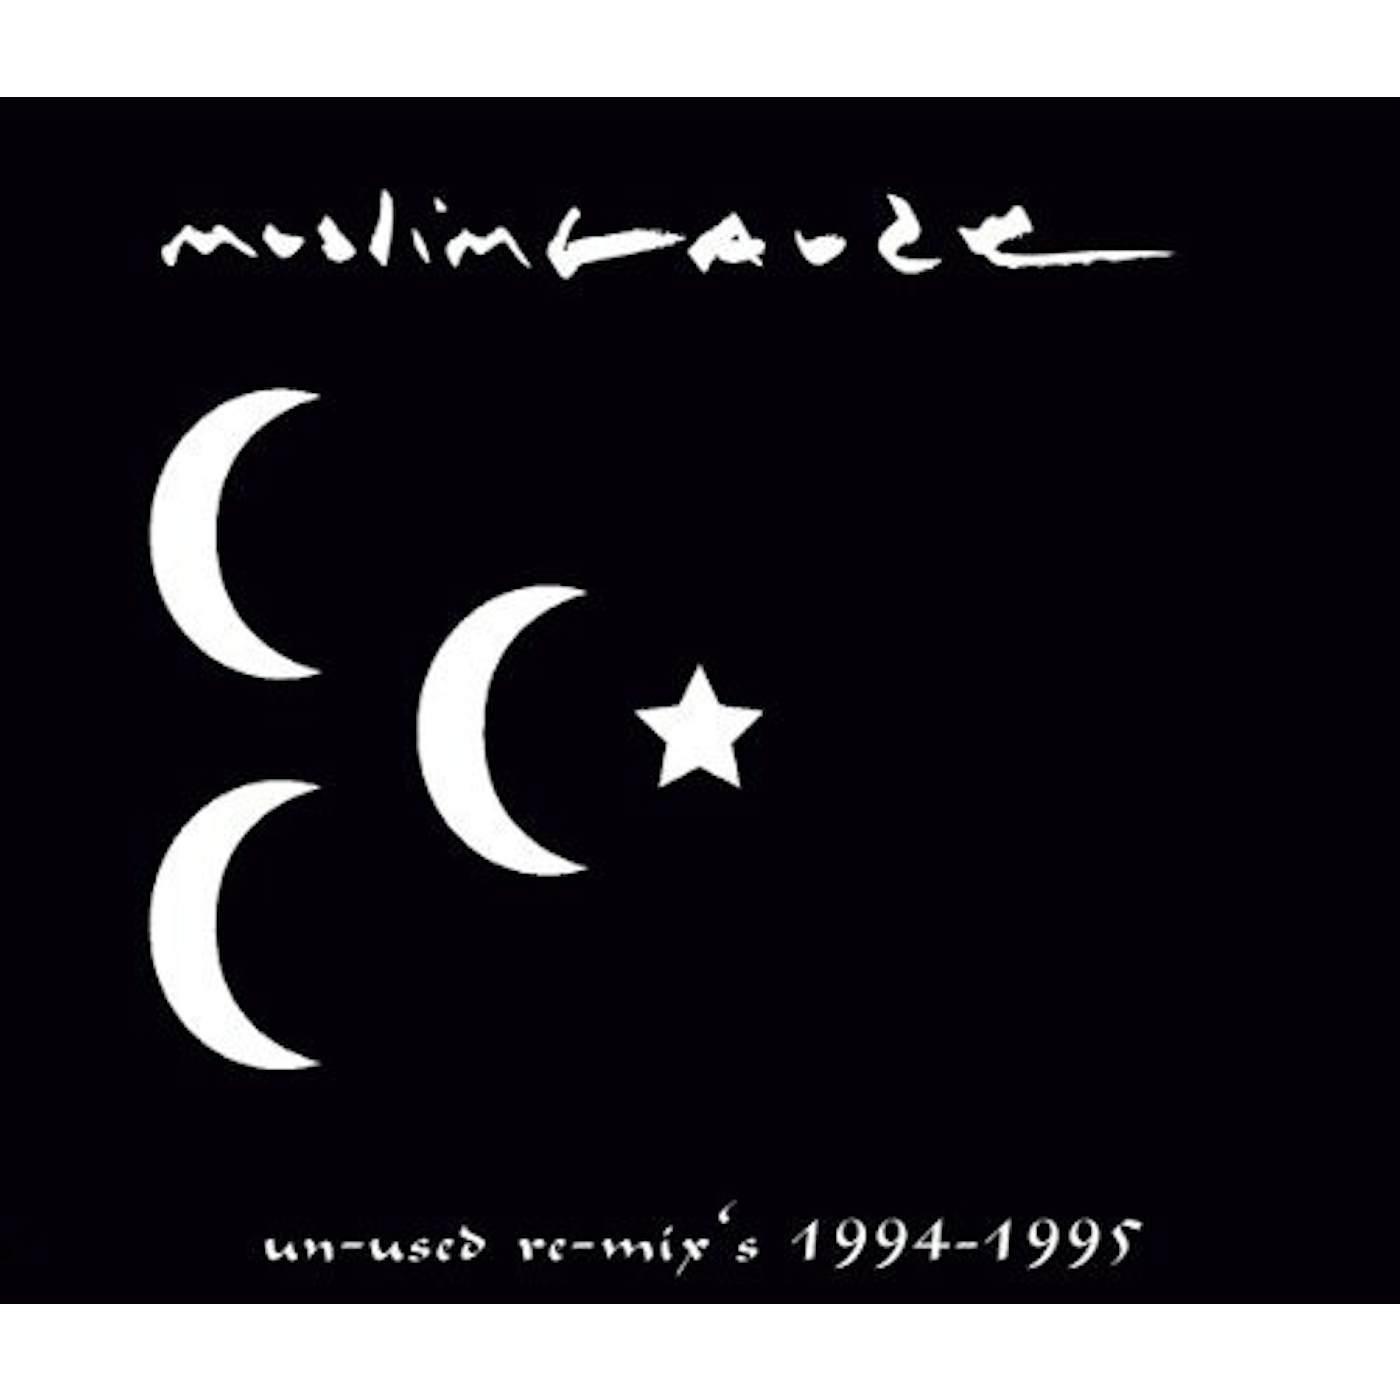 Muslimgauze UN-USED RE-MIX'S 1994-1995 CD